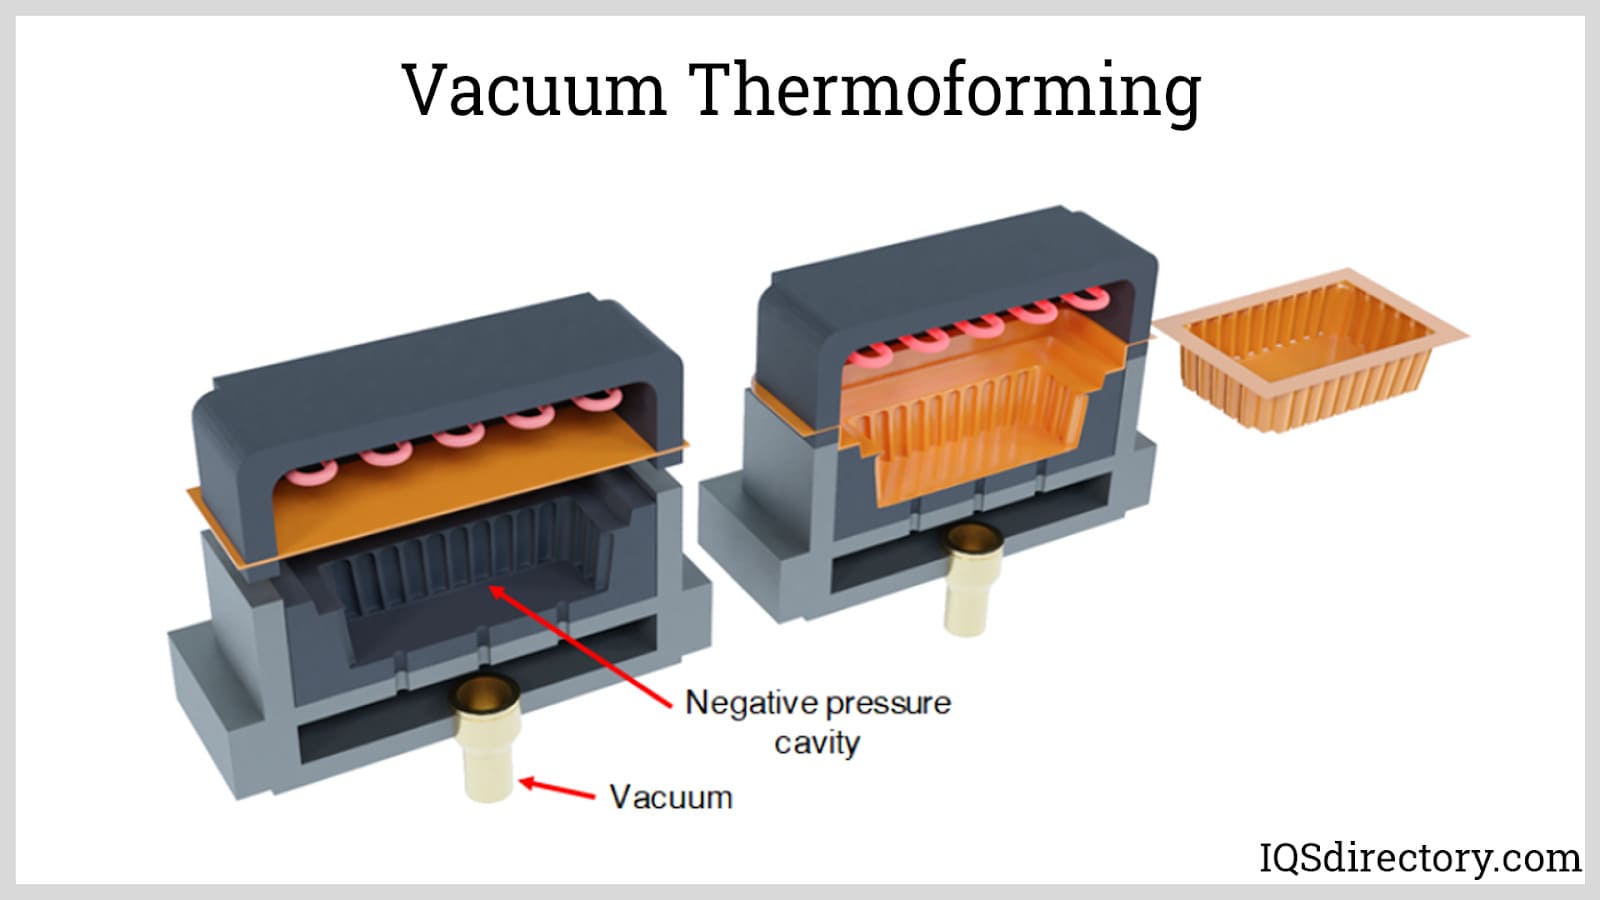 Vaccum Thermoforming